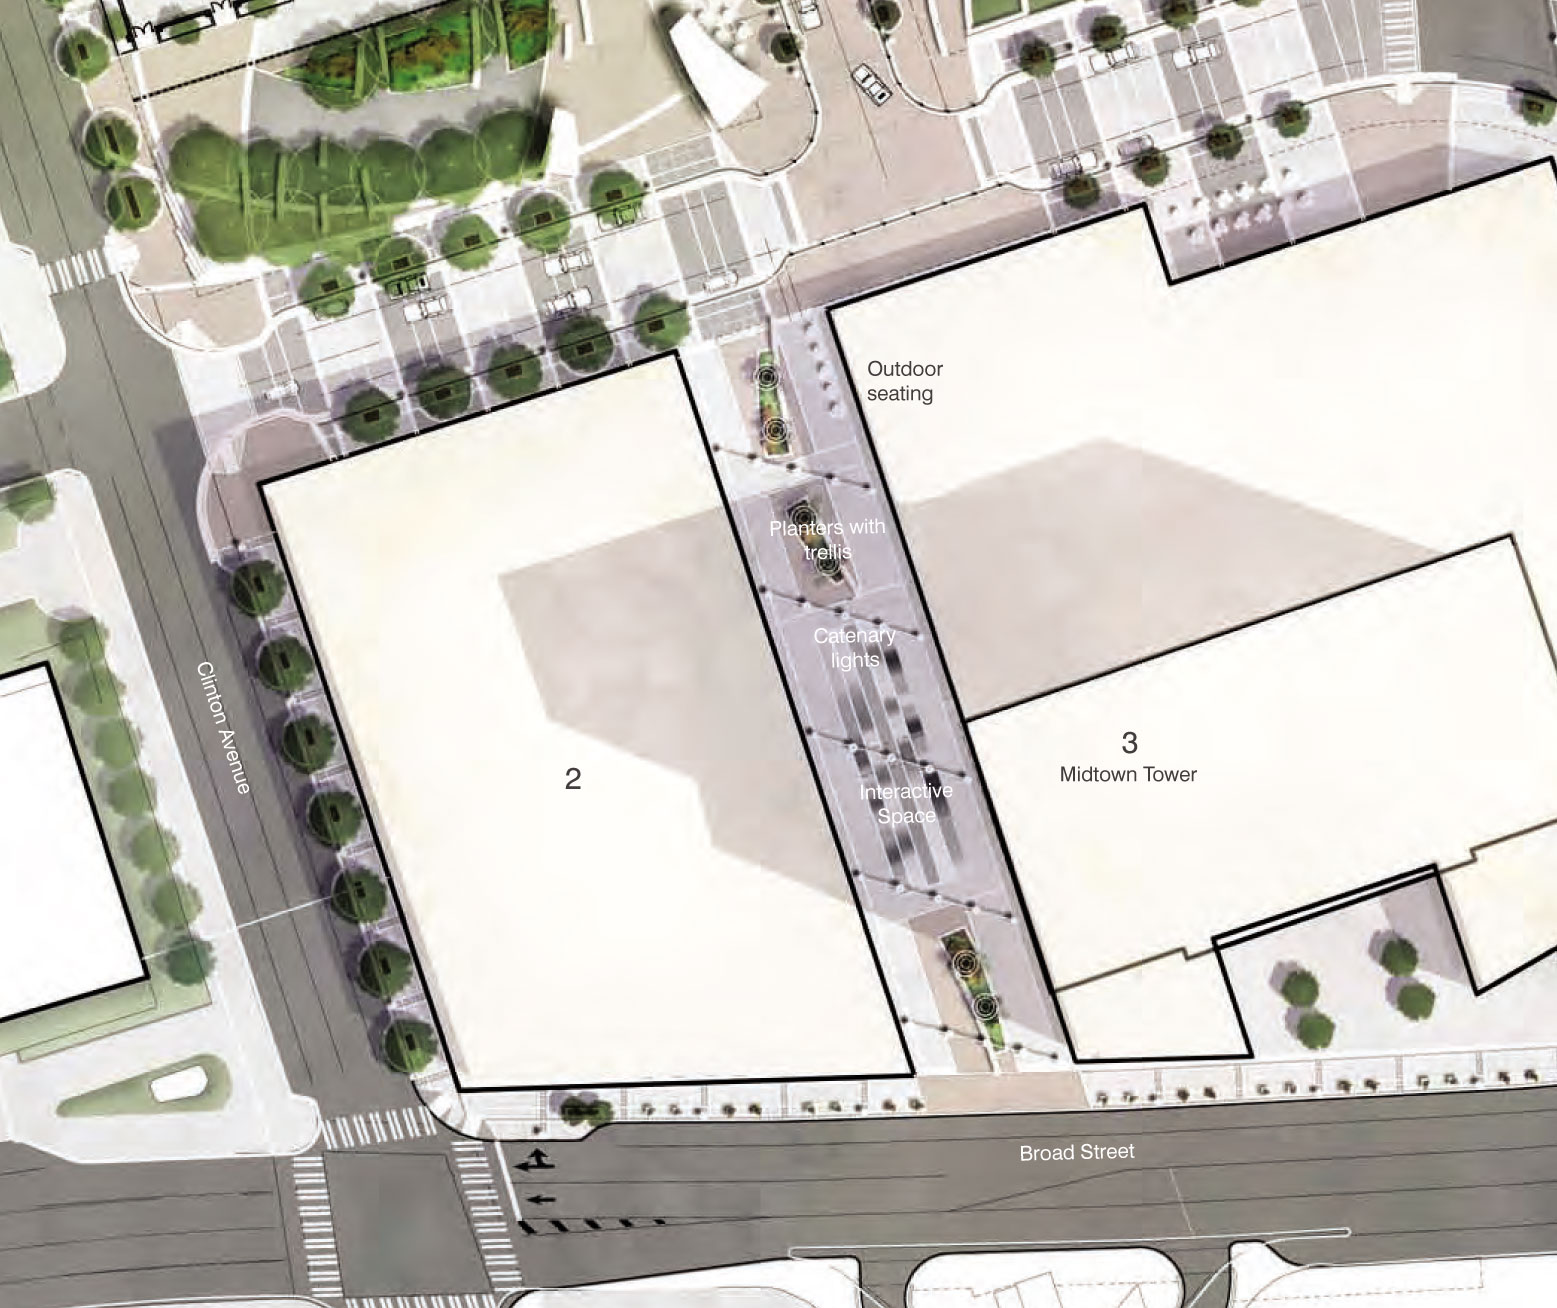 Plan view of future Midtown pedestrian street.